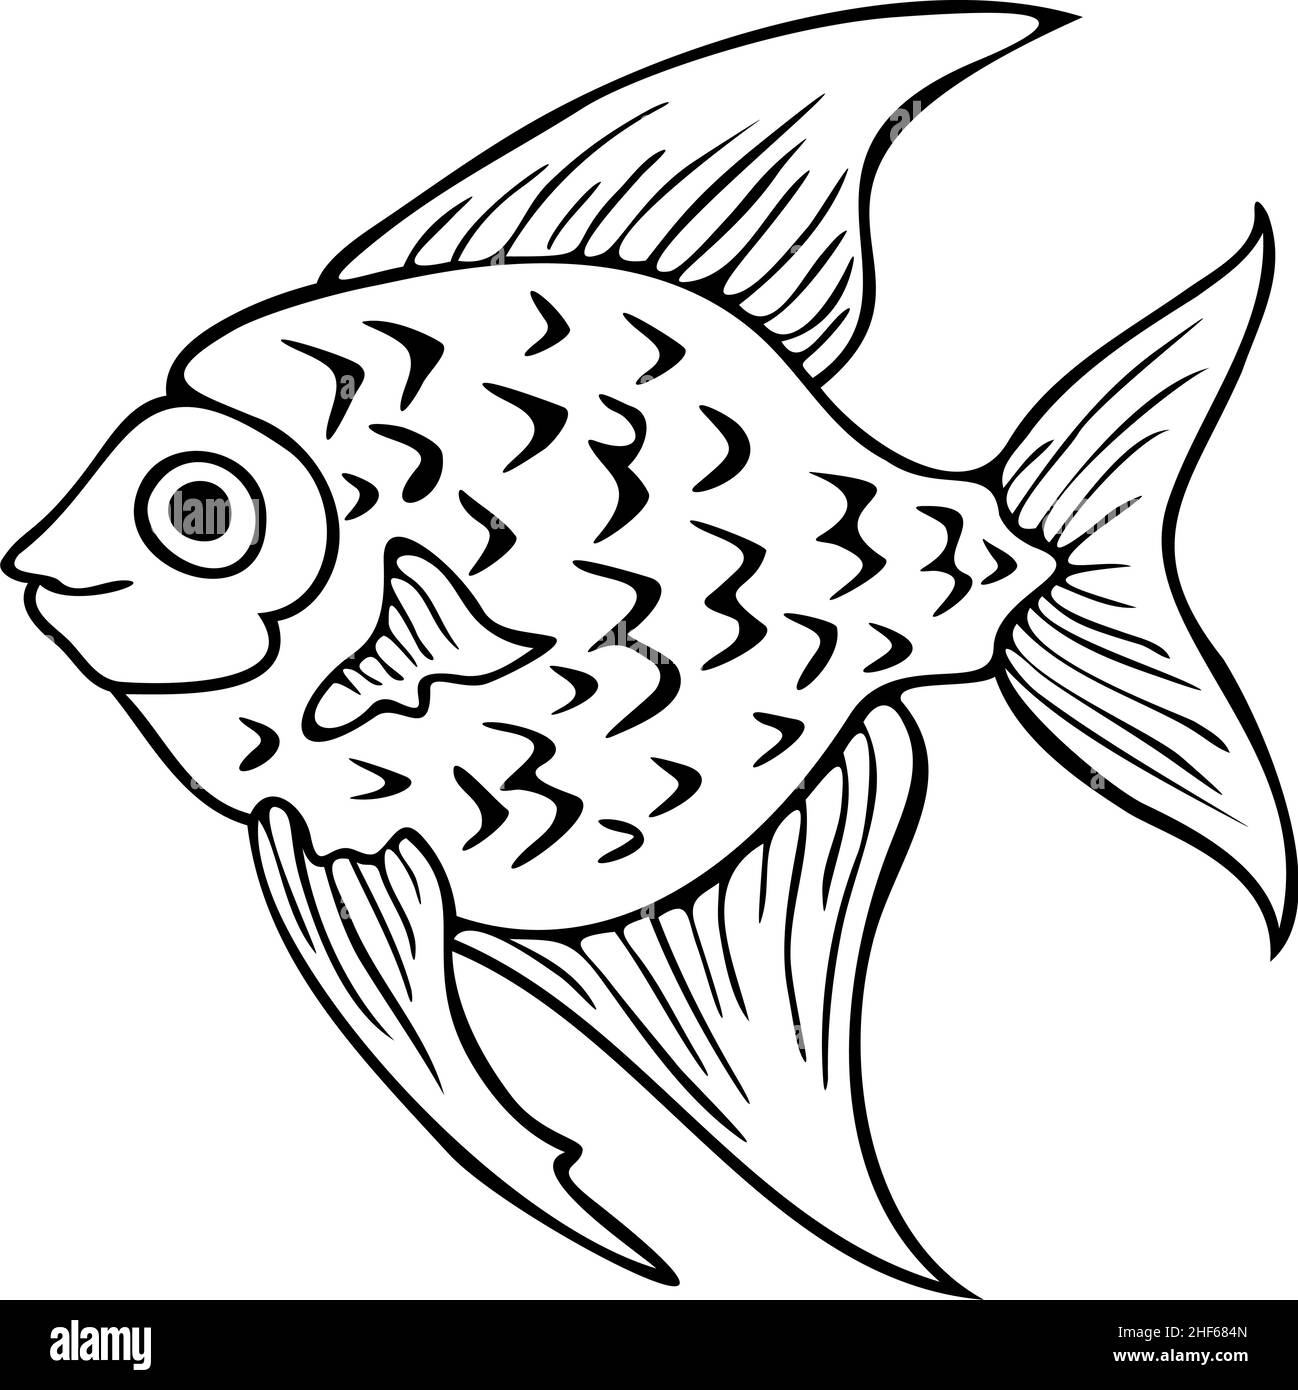 fish black and white clip art